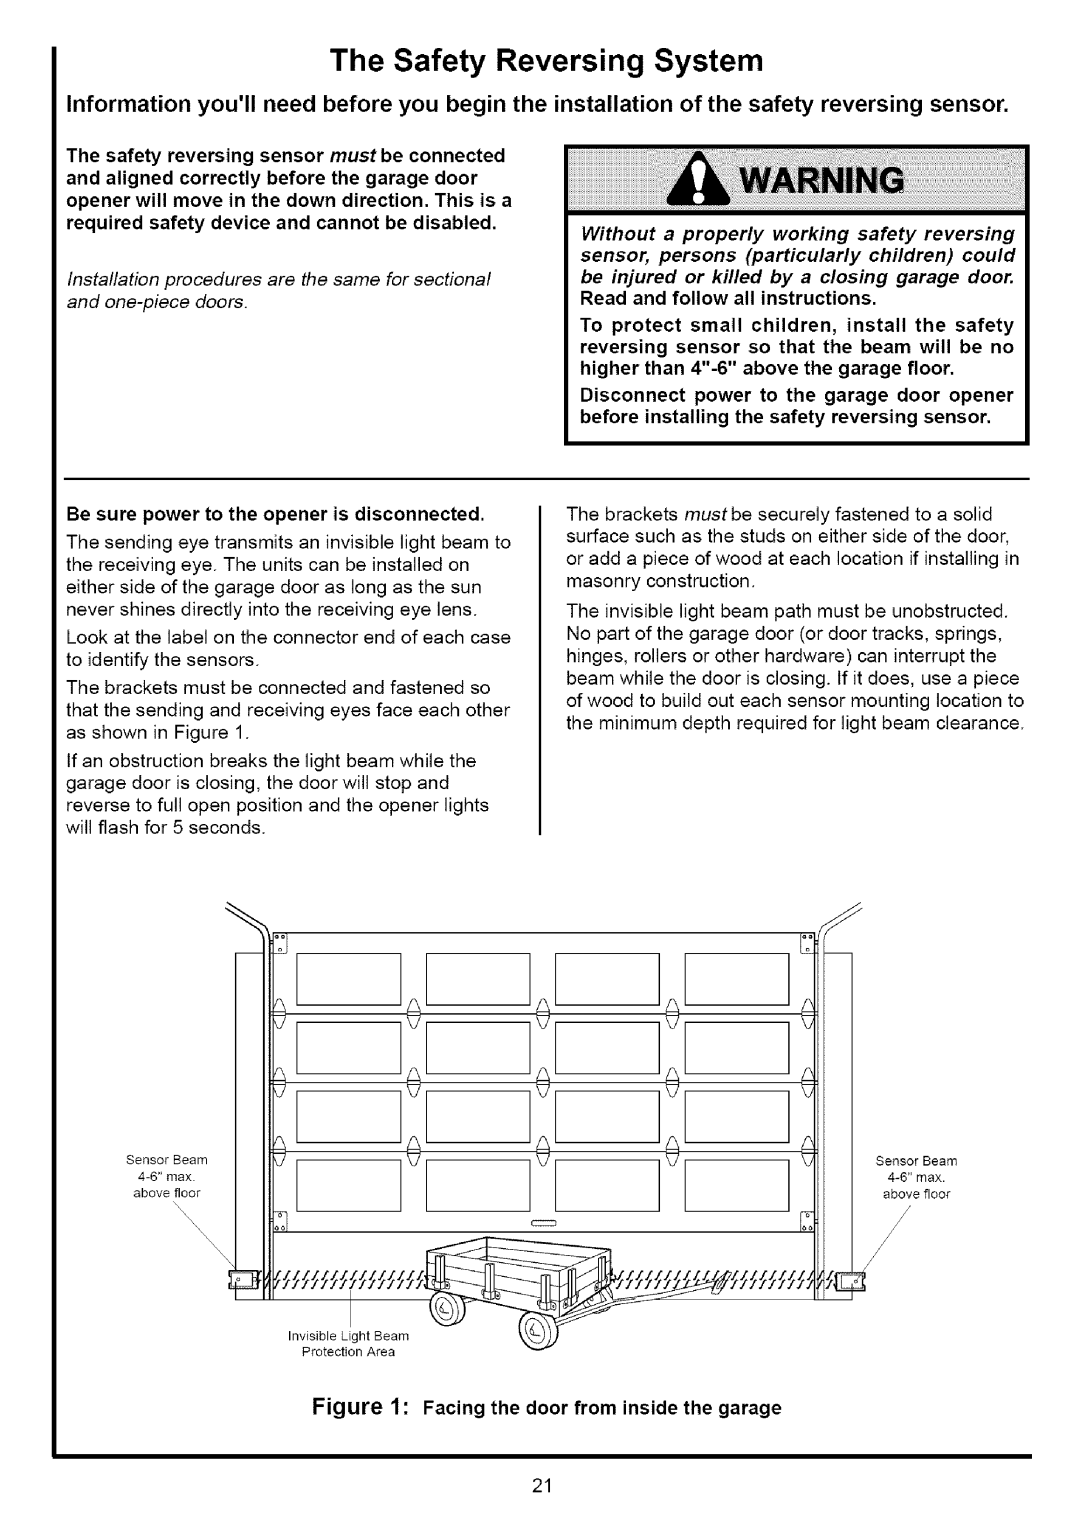 Sears 139.53641SRT, 139.53636SRT, 139.53525SRT, 139.53640SRT Safety Reversing System, Facing the door from inside the garage 